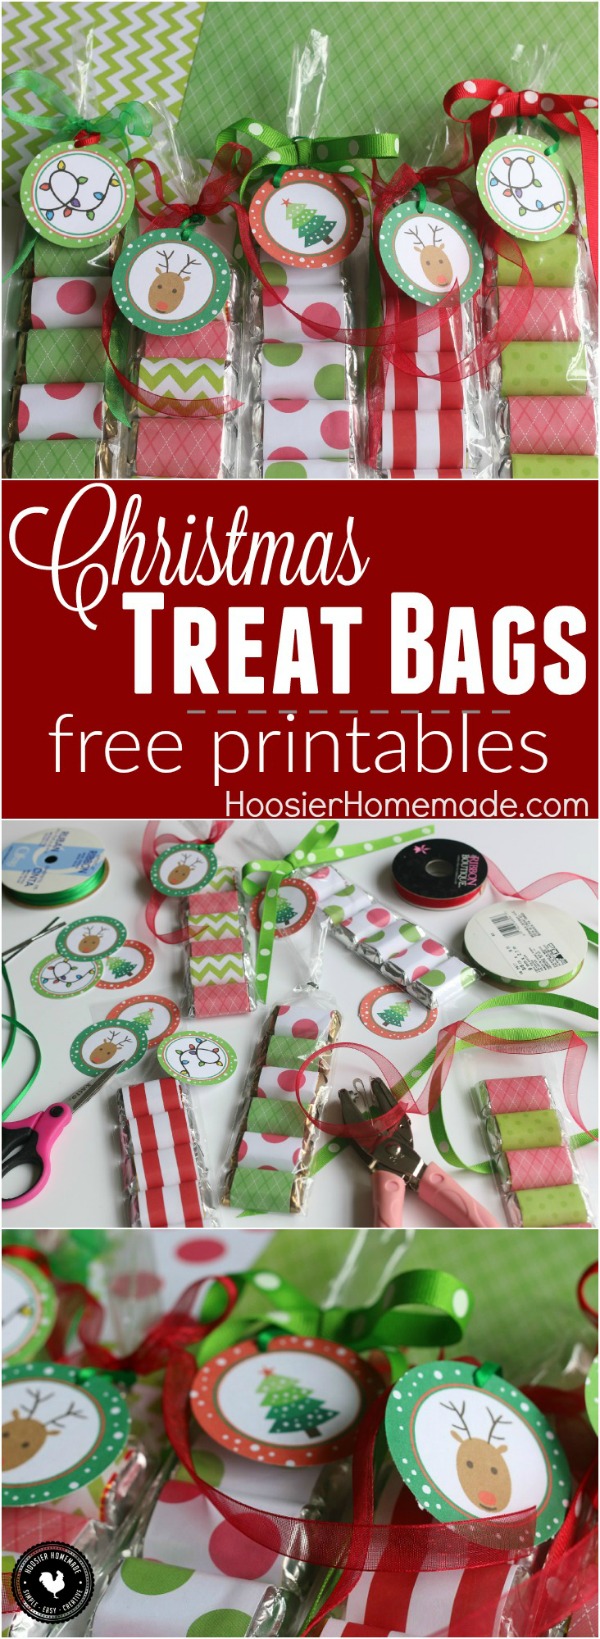 christmas-treat-bags-hoosier-homemade